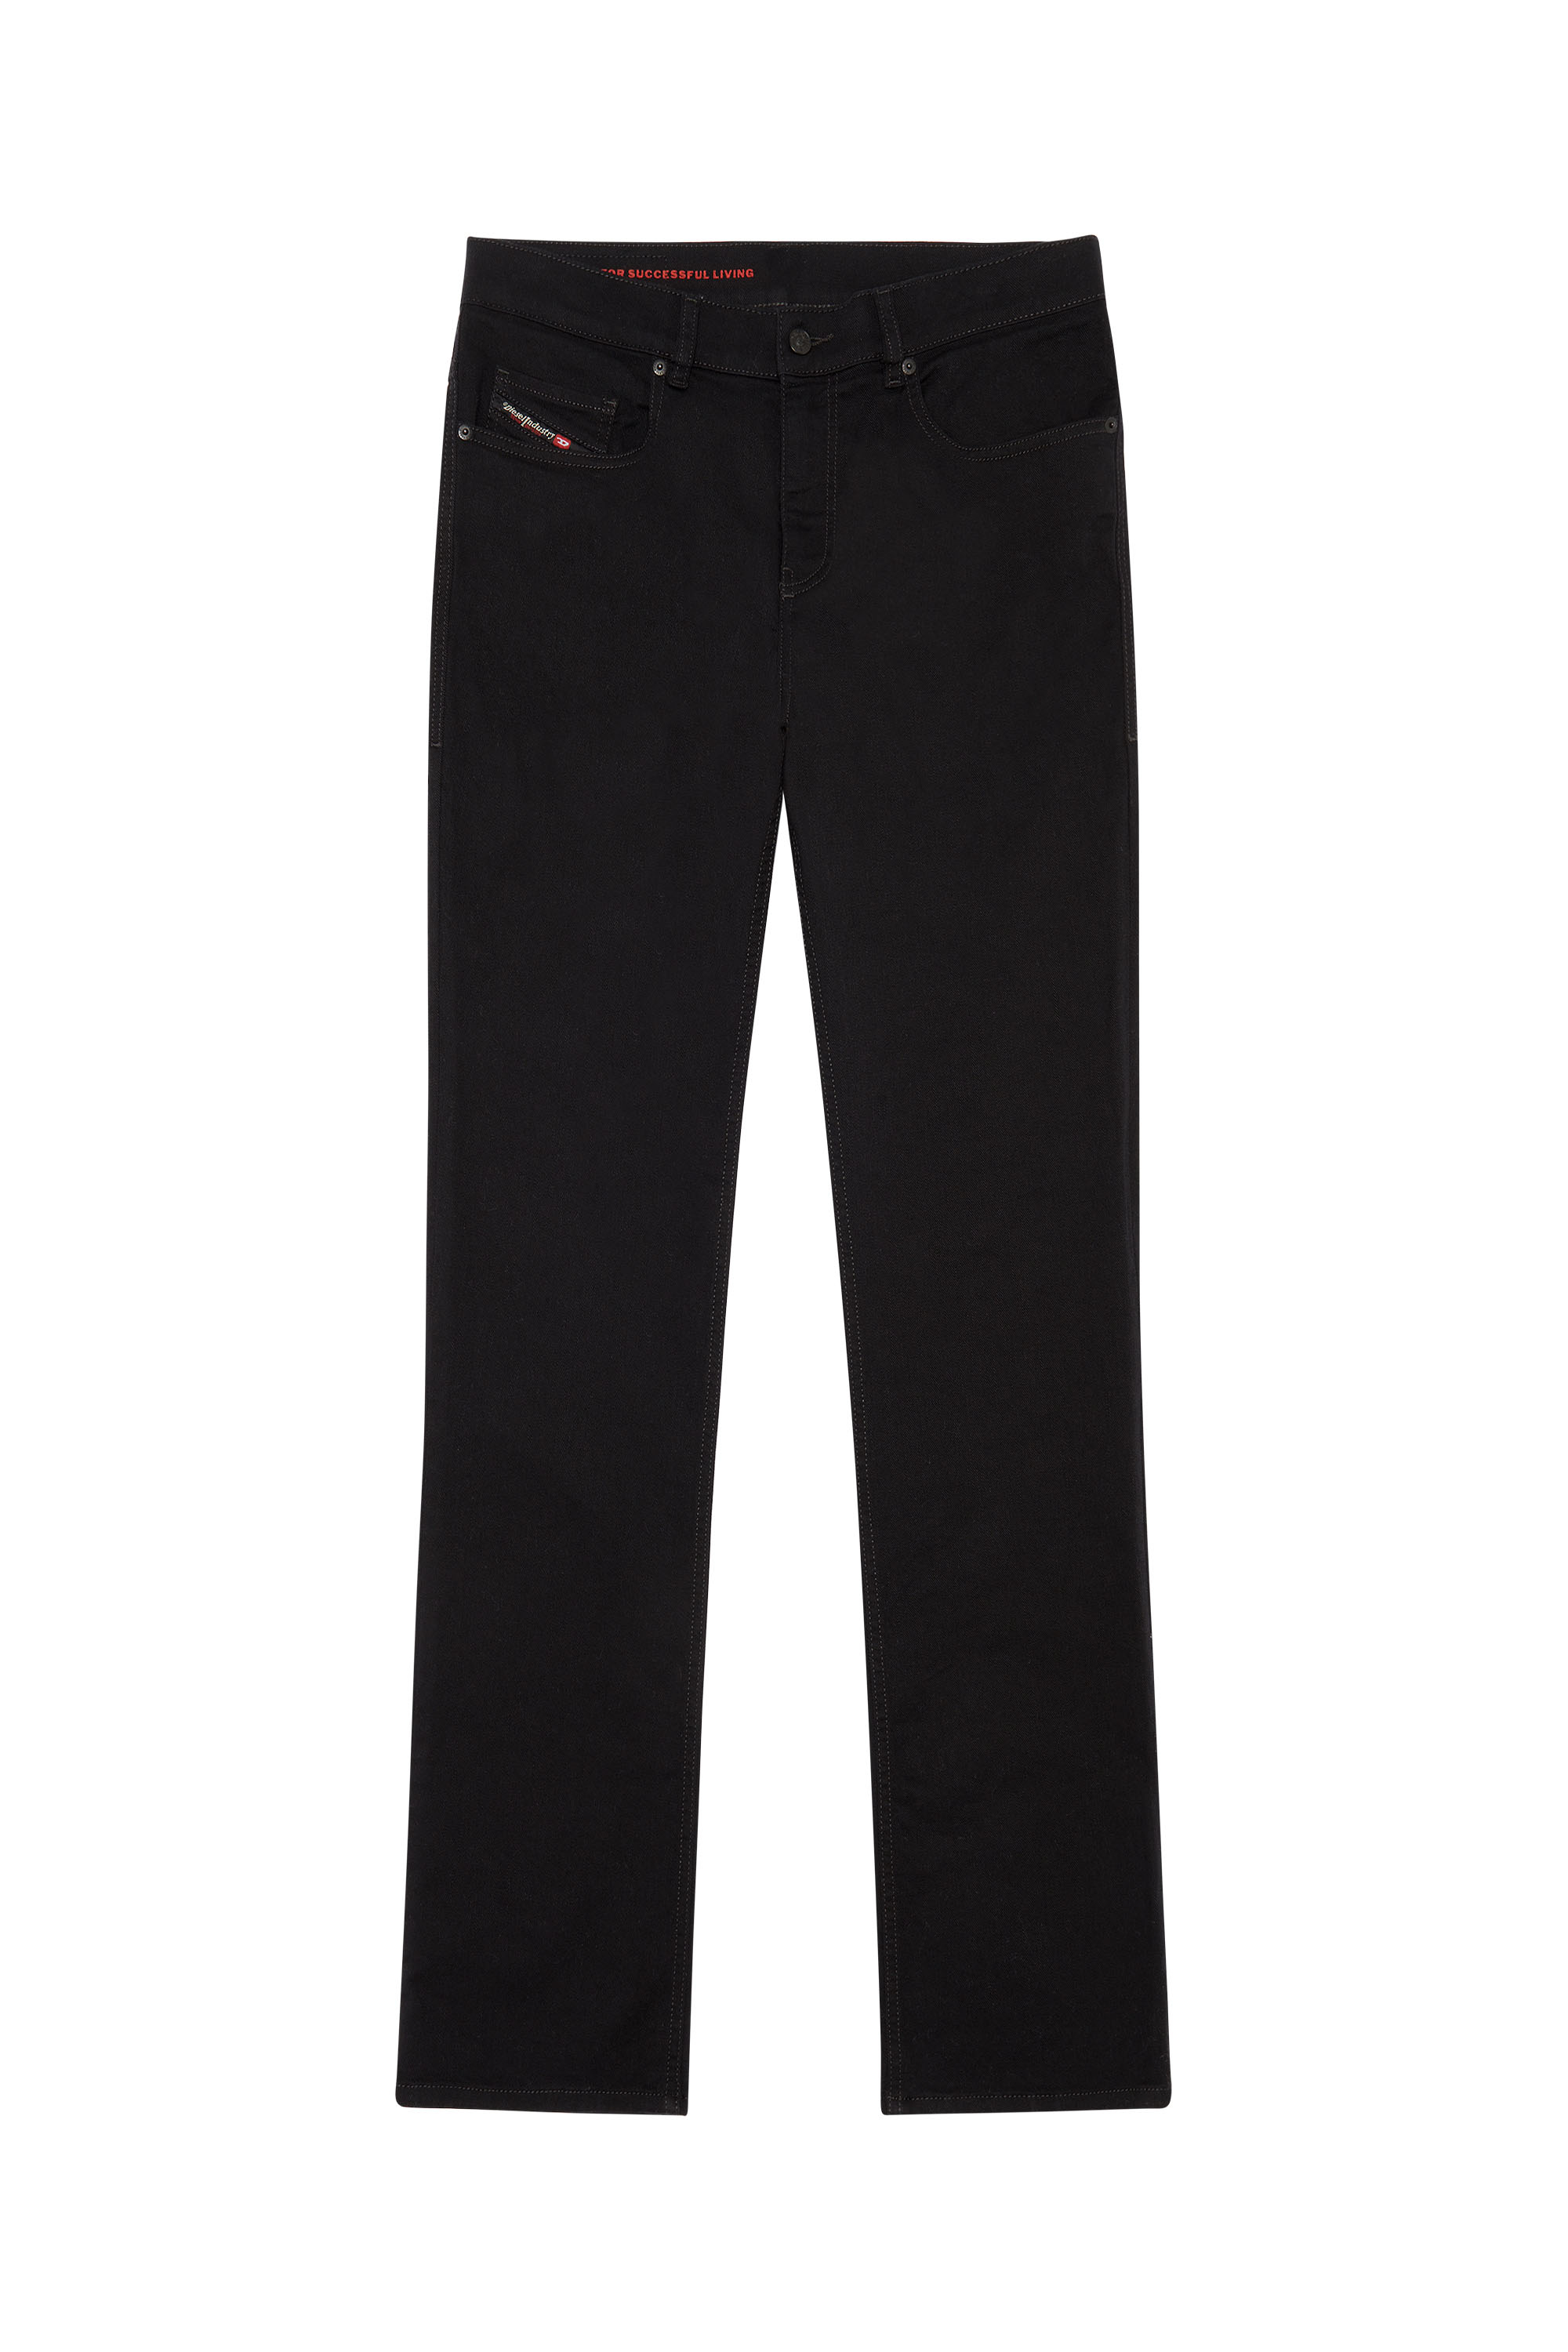 2021 D-VOCS 069YP Bootcut Jeans, Black/Dark grey - Jeans